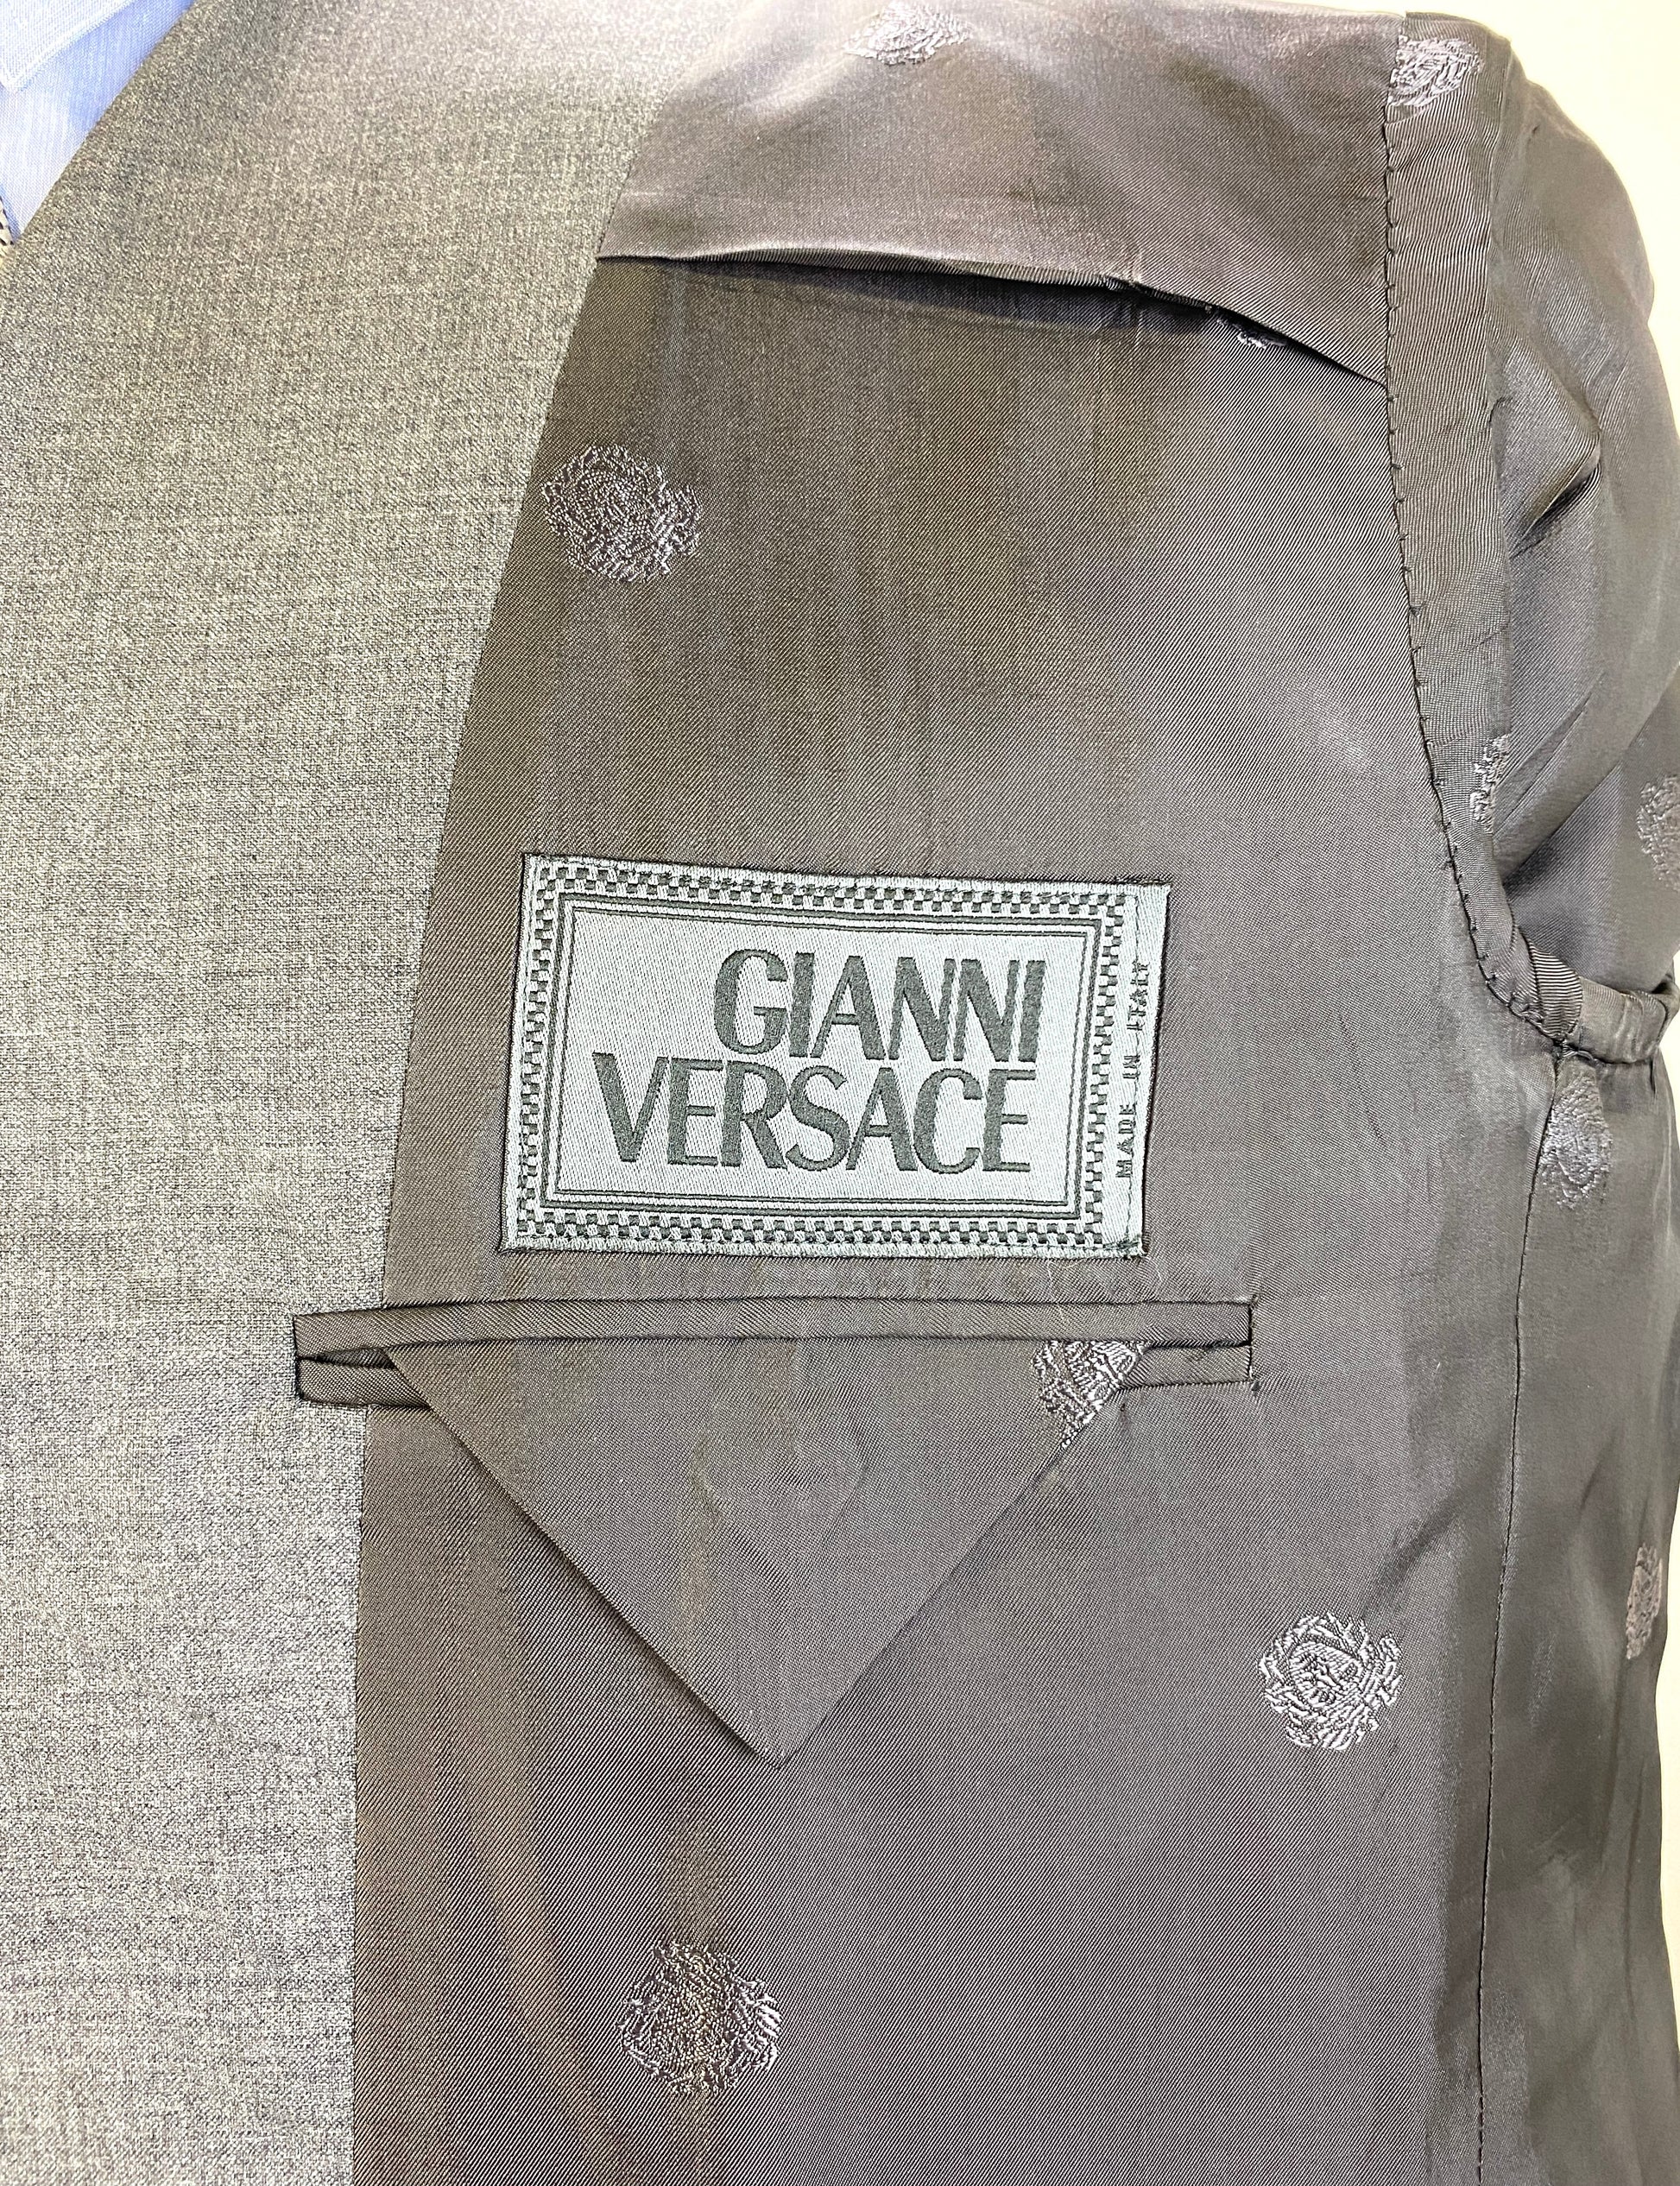 1980s Vintage Grey Wool Men's Designer Blazer, Gianni Versace Jacket, C40